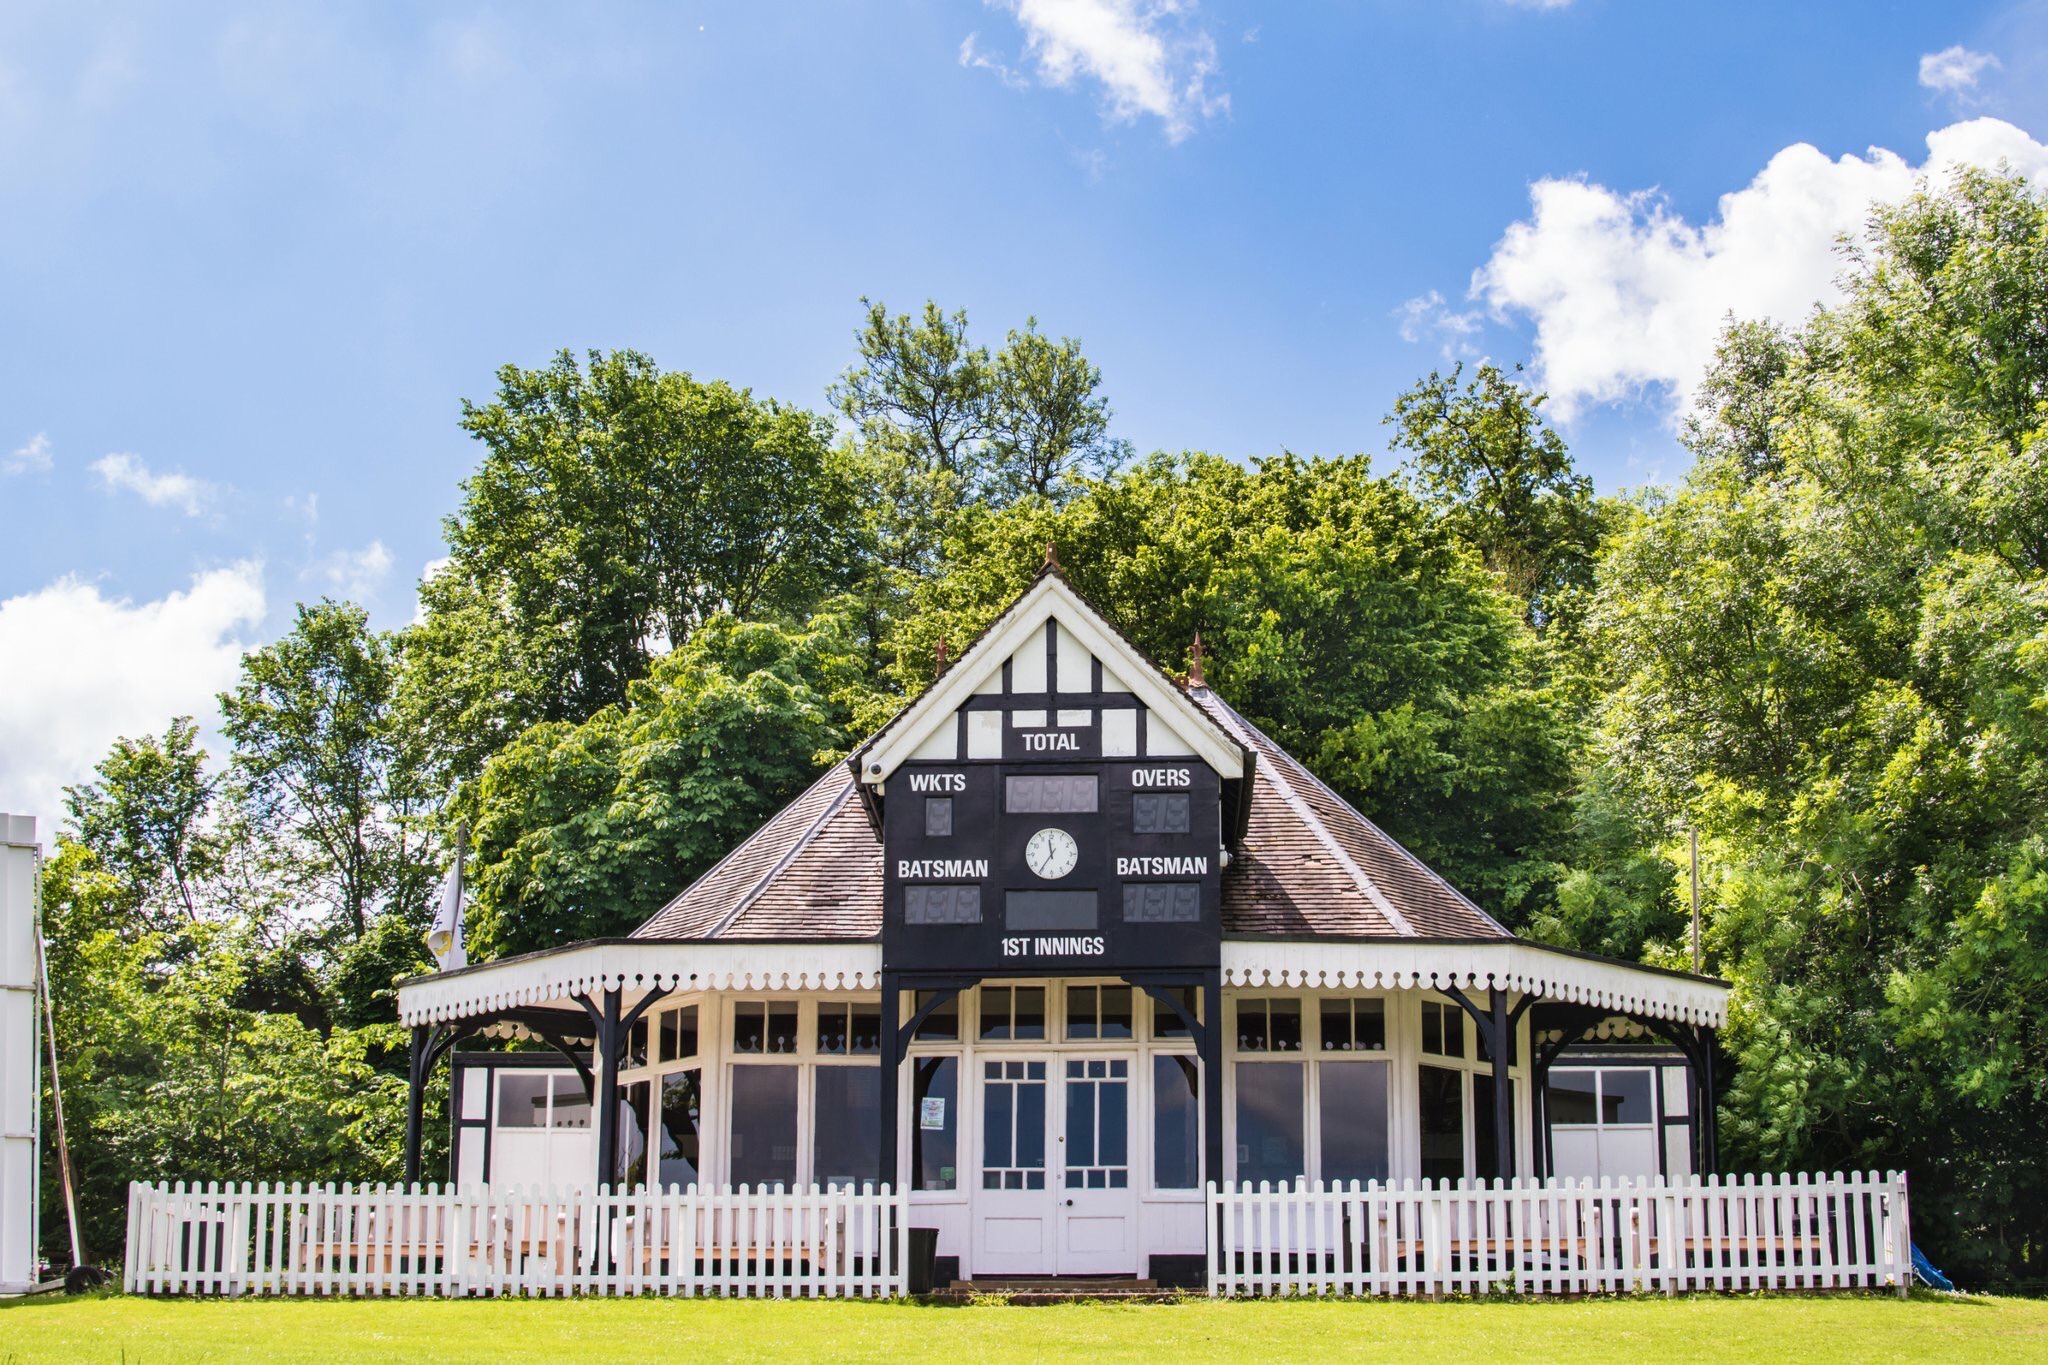 Burghley Park Cricket Club